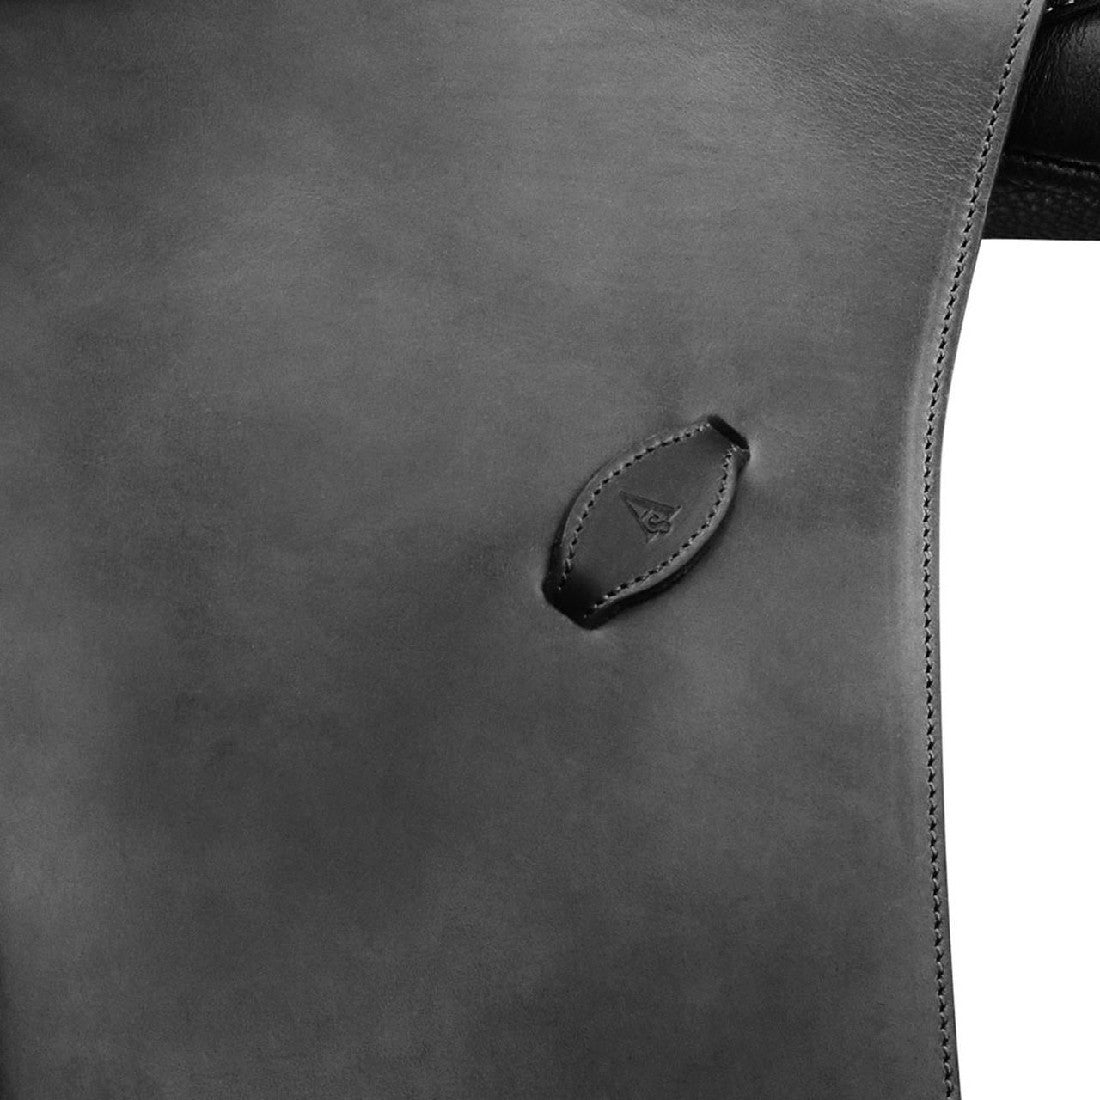 Close-up of an Arena Saddles logo on black equestrian equipment.